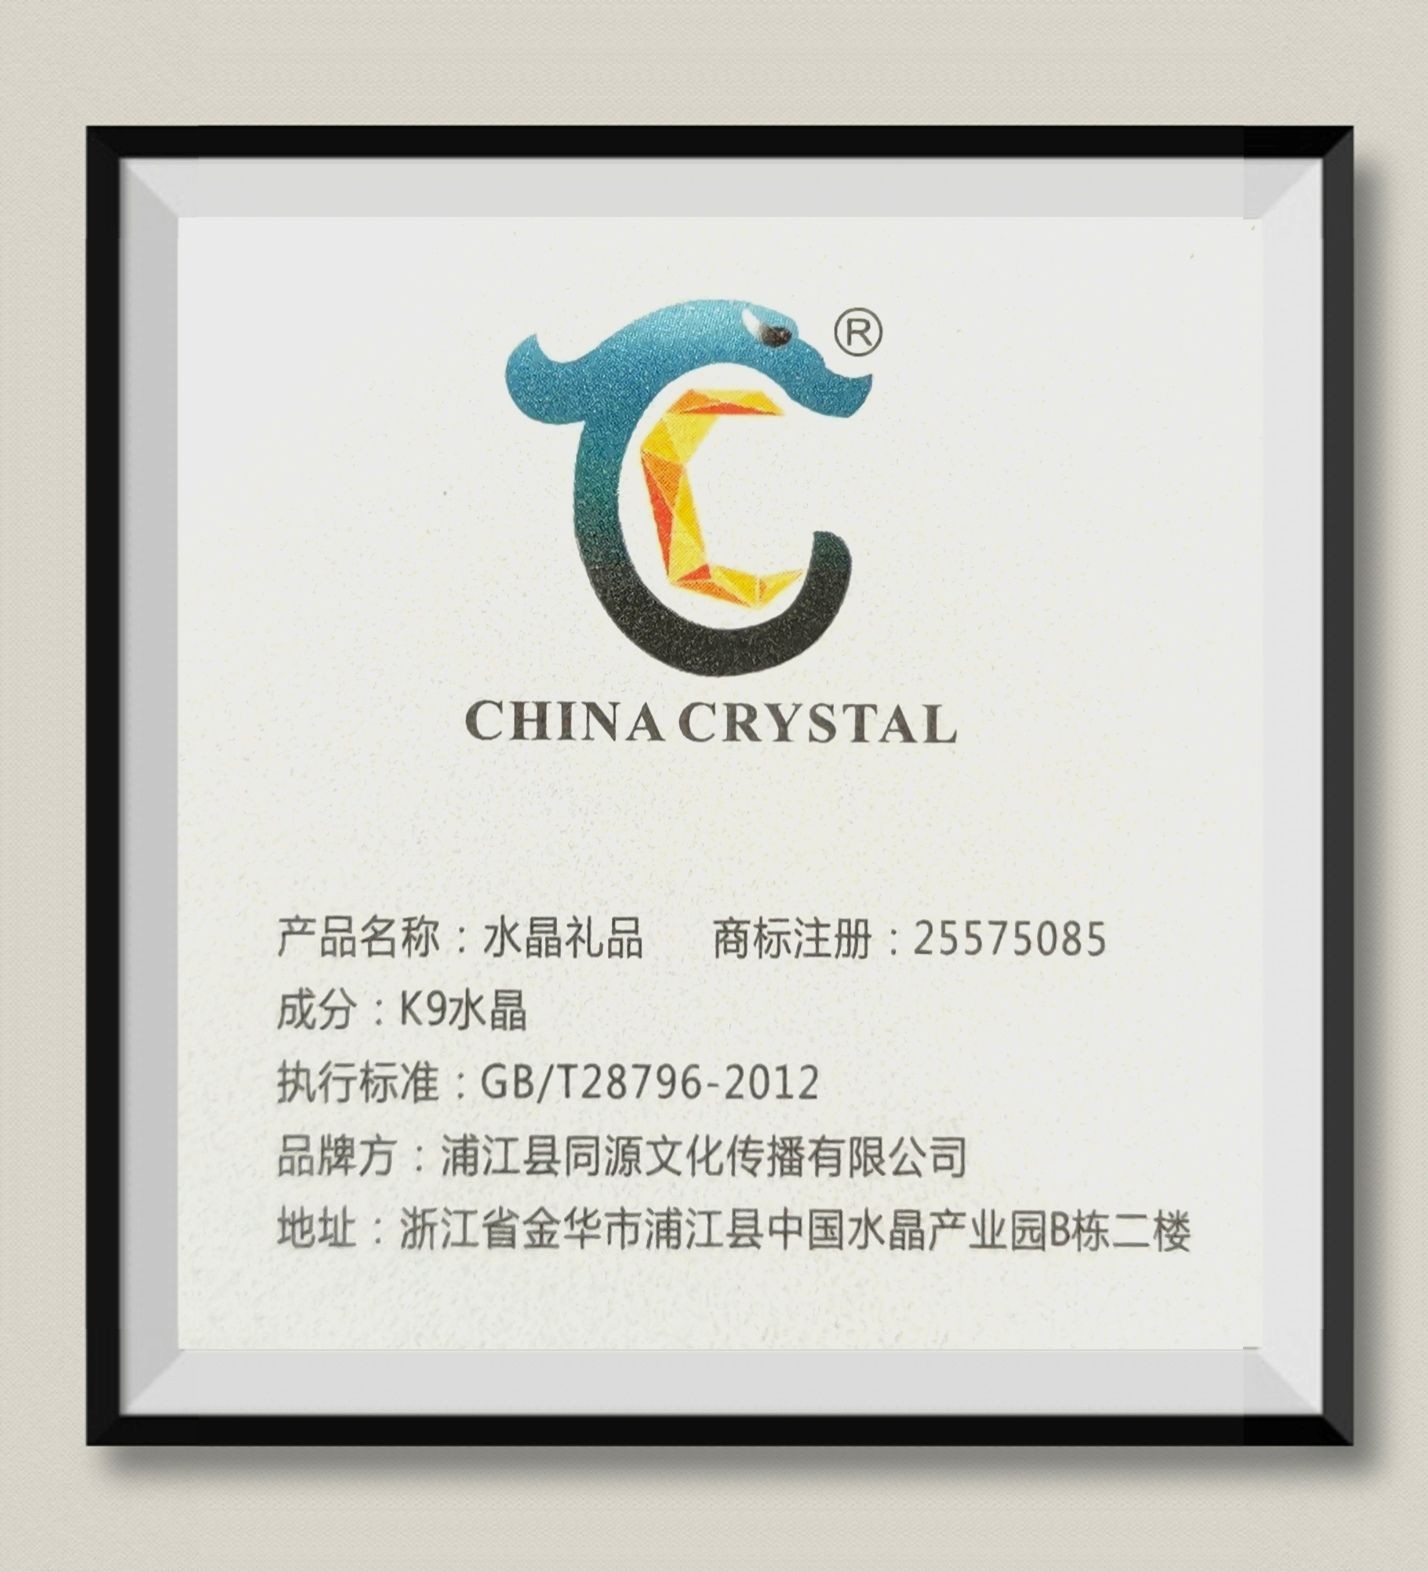 COTV直播-浦江县同源文化传播有限公司专业研制各种工艺水晶制品，设计独特，制作精美，款式多样，欢迎大家光临！